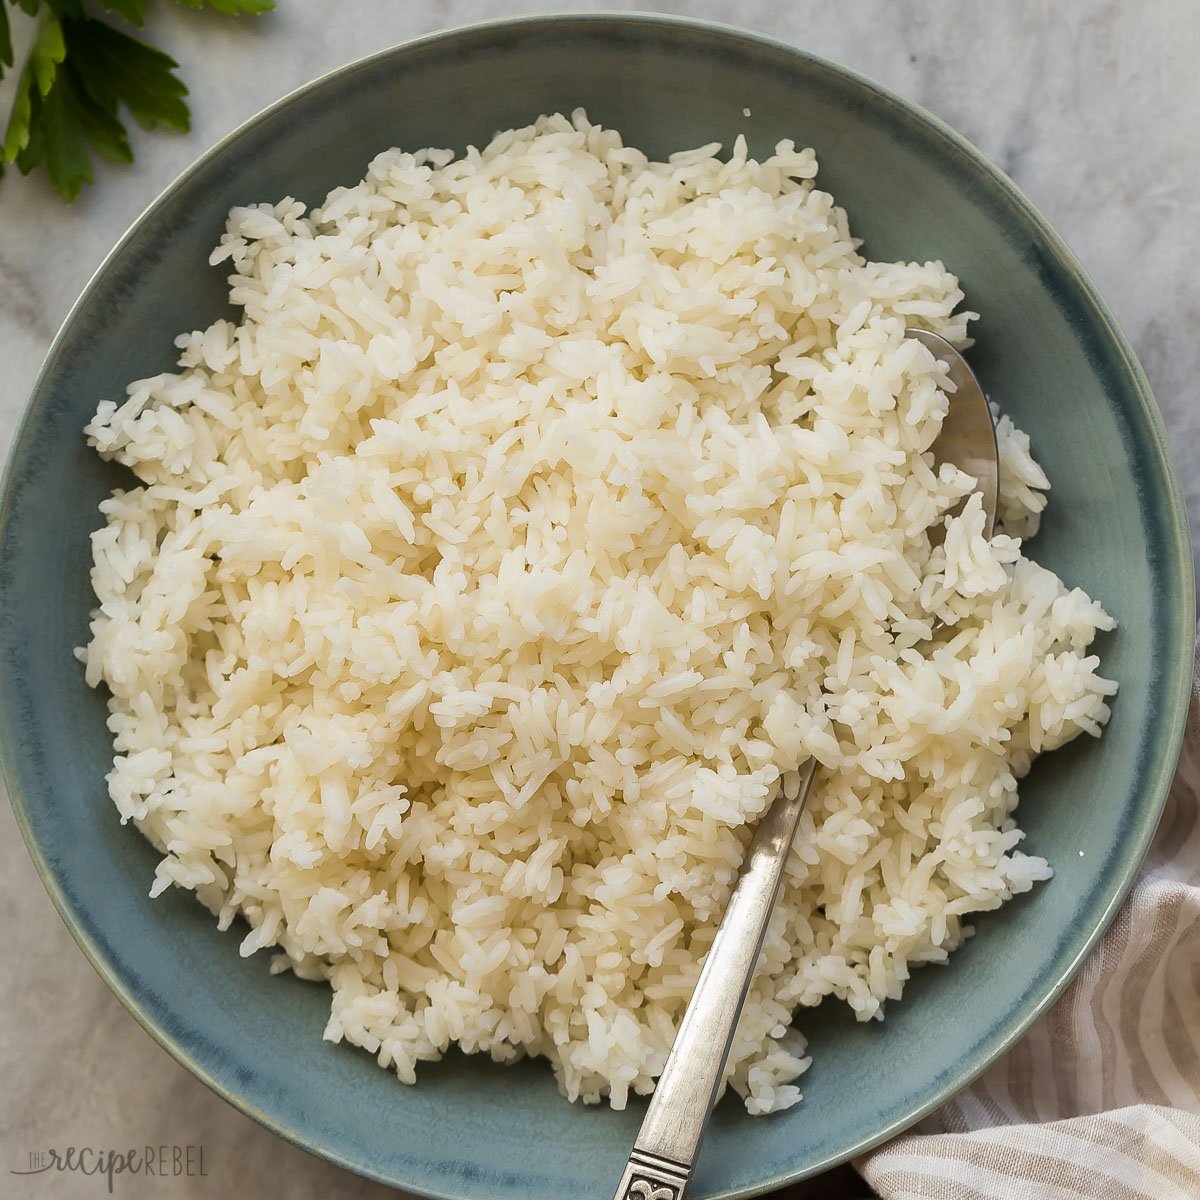 https://www.thereciperebel.com/wp-content/uploads/2021/10/instant-pot-jasmine-rice-www.thereciperebel.com-1200-1-of-1.jpg